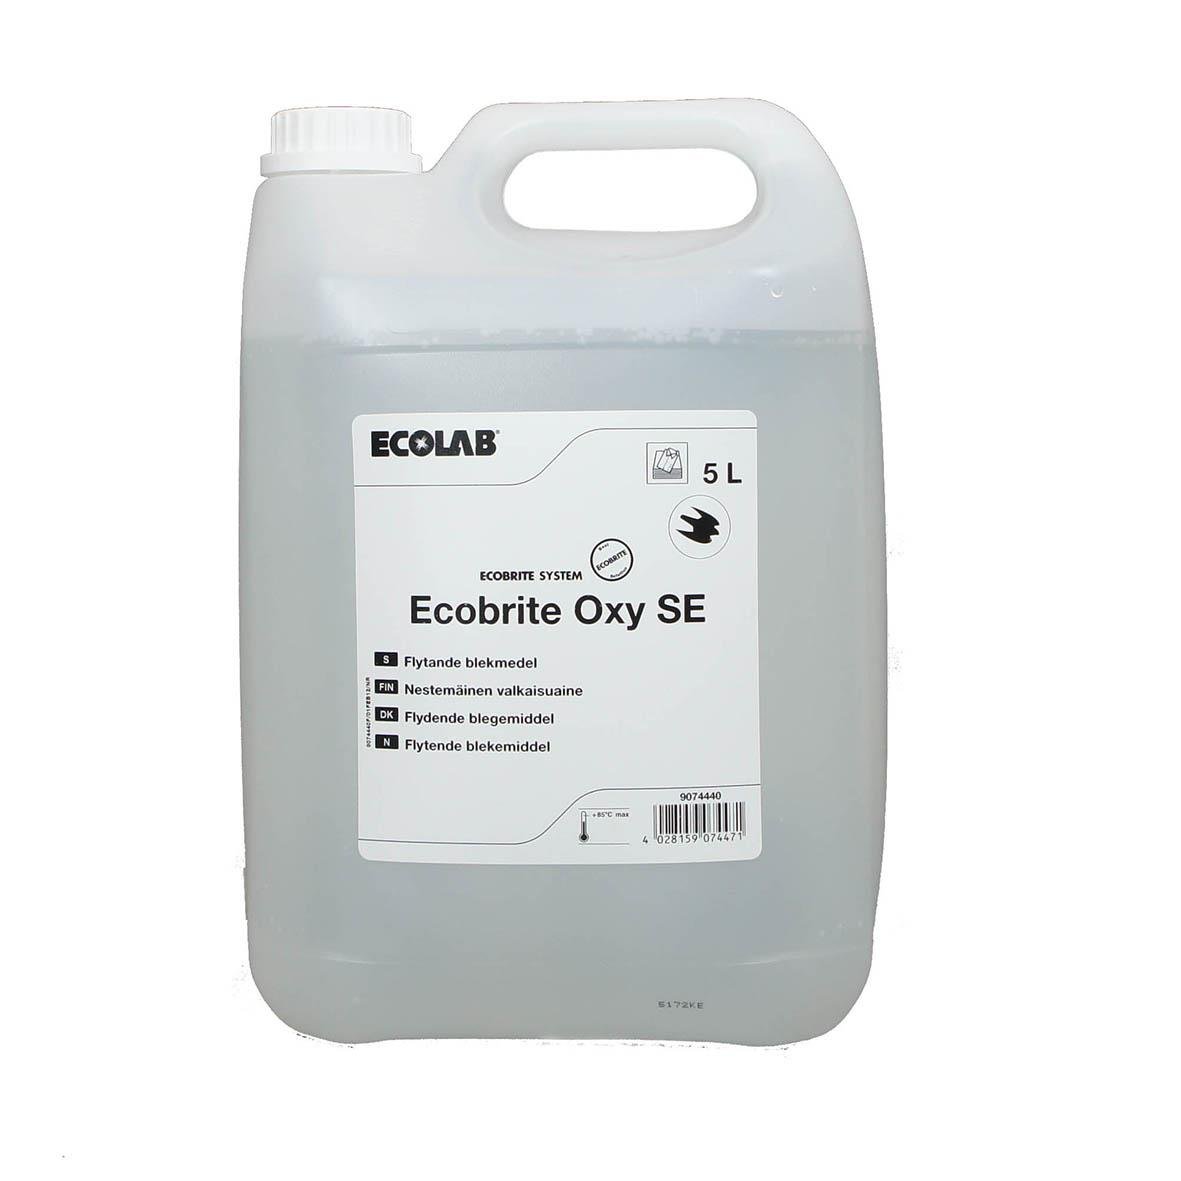 Blekmedel Ecolab Ecobrite Oxy SE 5L